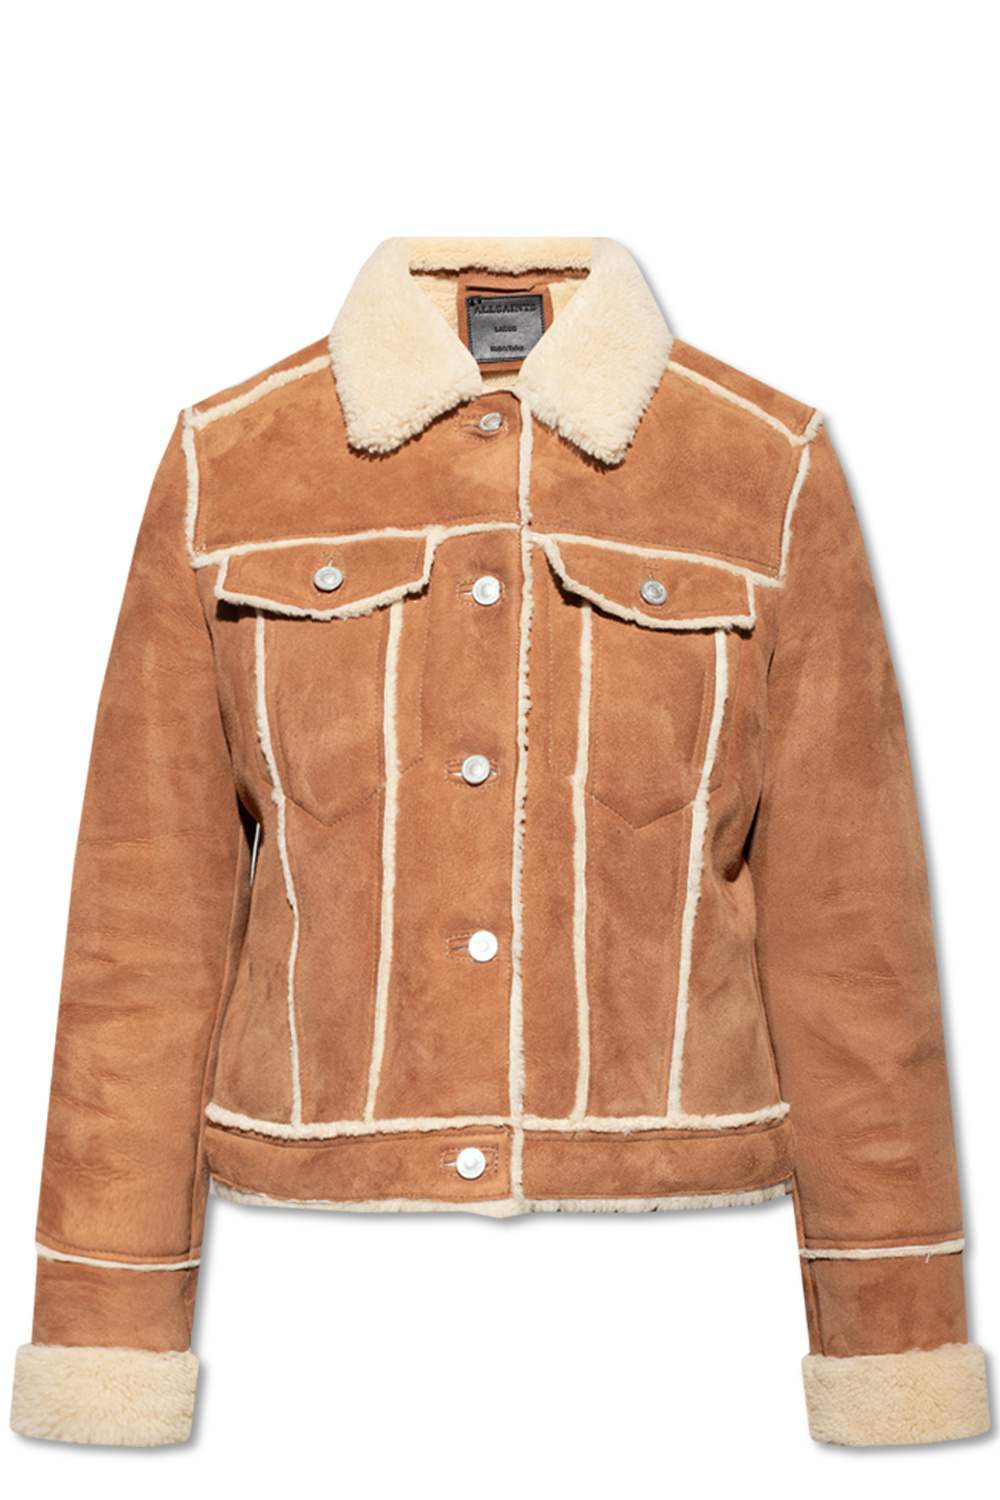 AllSaints ‘Kingsly’ shearling jacket